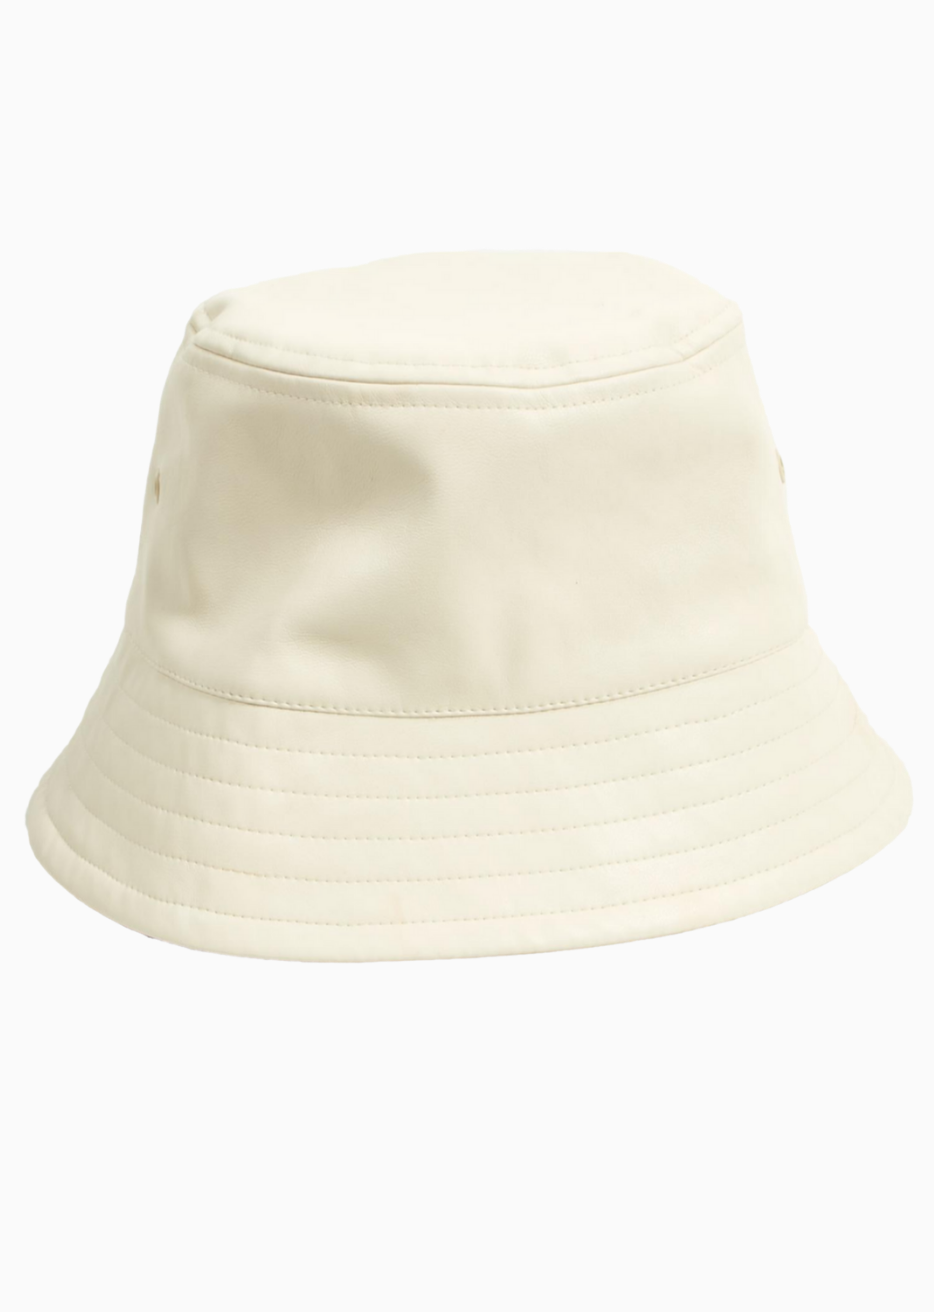 Zero Waste Waterproof Vegan Leather Bucket Hat Champagne White Sustainable Fashion